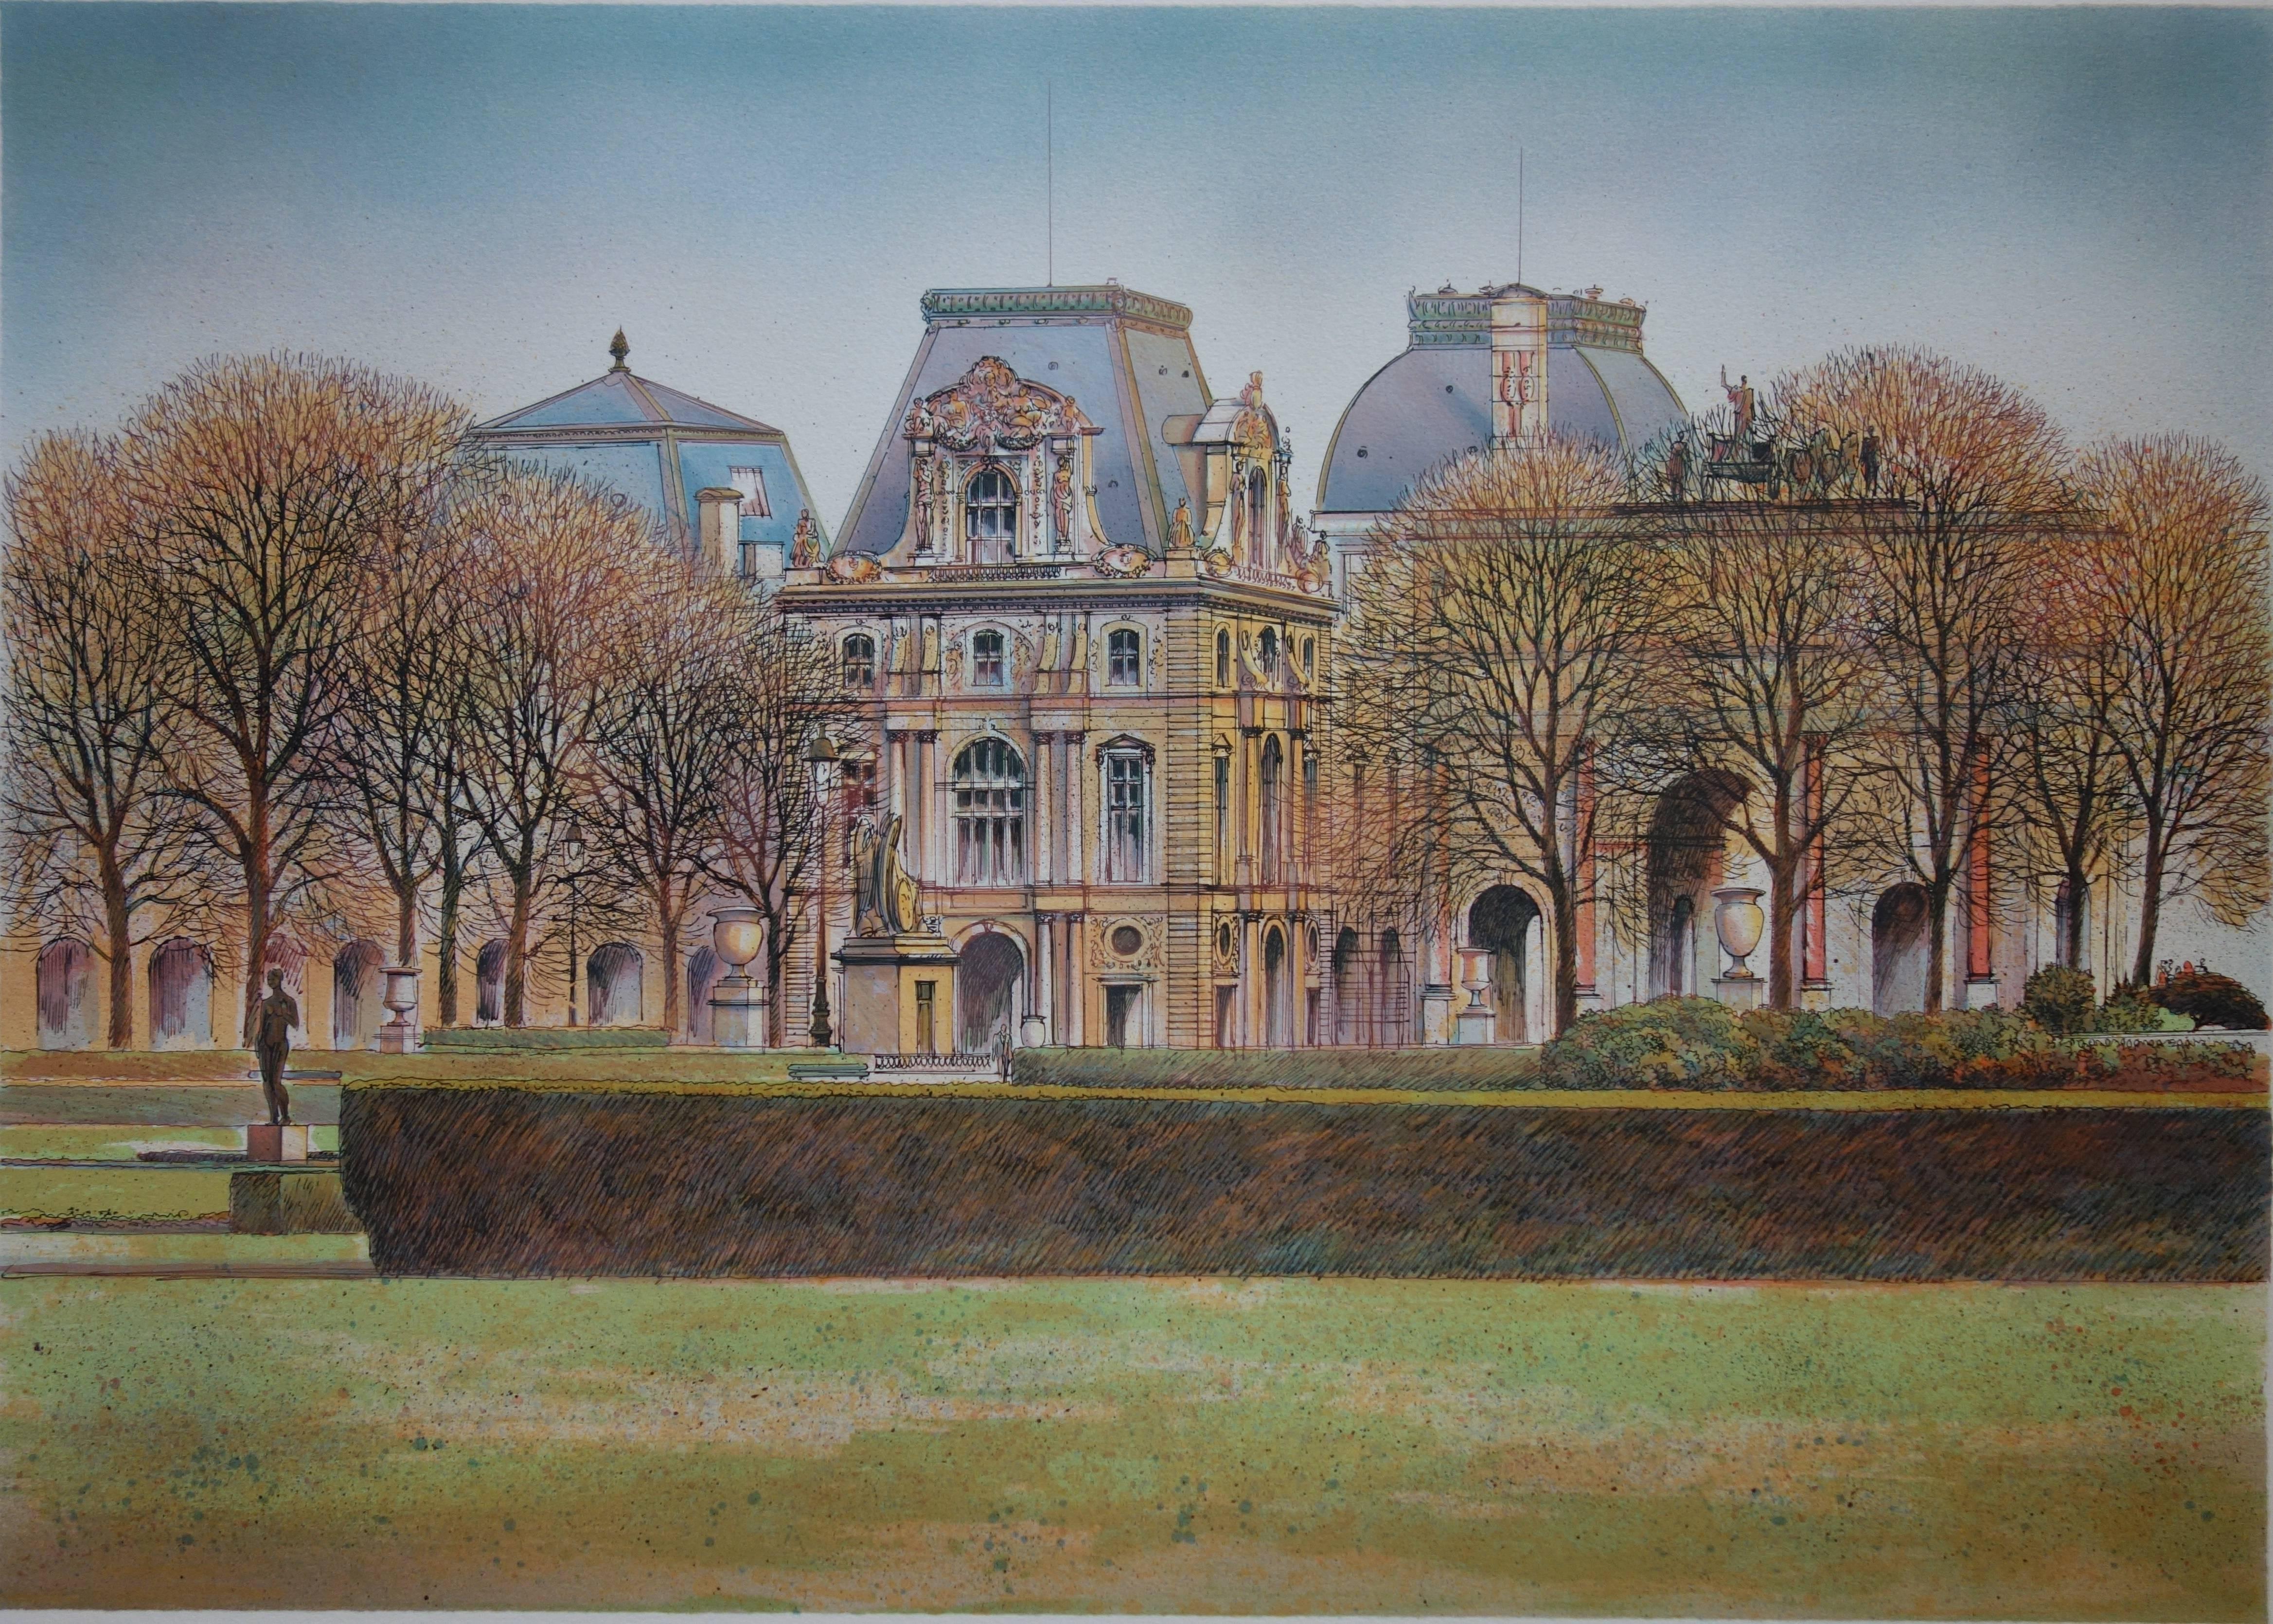 Paris : Louvre Museum - Original handsigned lithograph - 275ex - Modern Print by Rolf RAFFLEWSKI